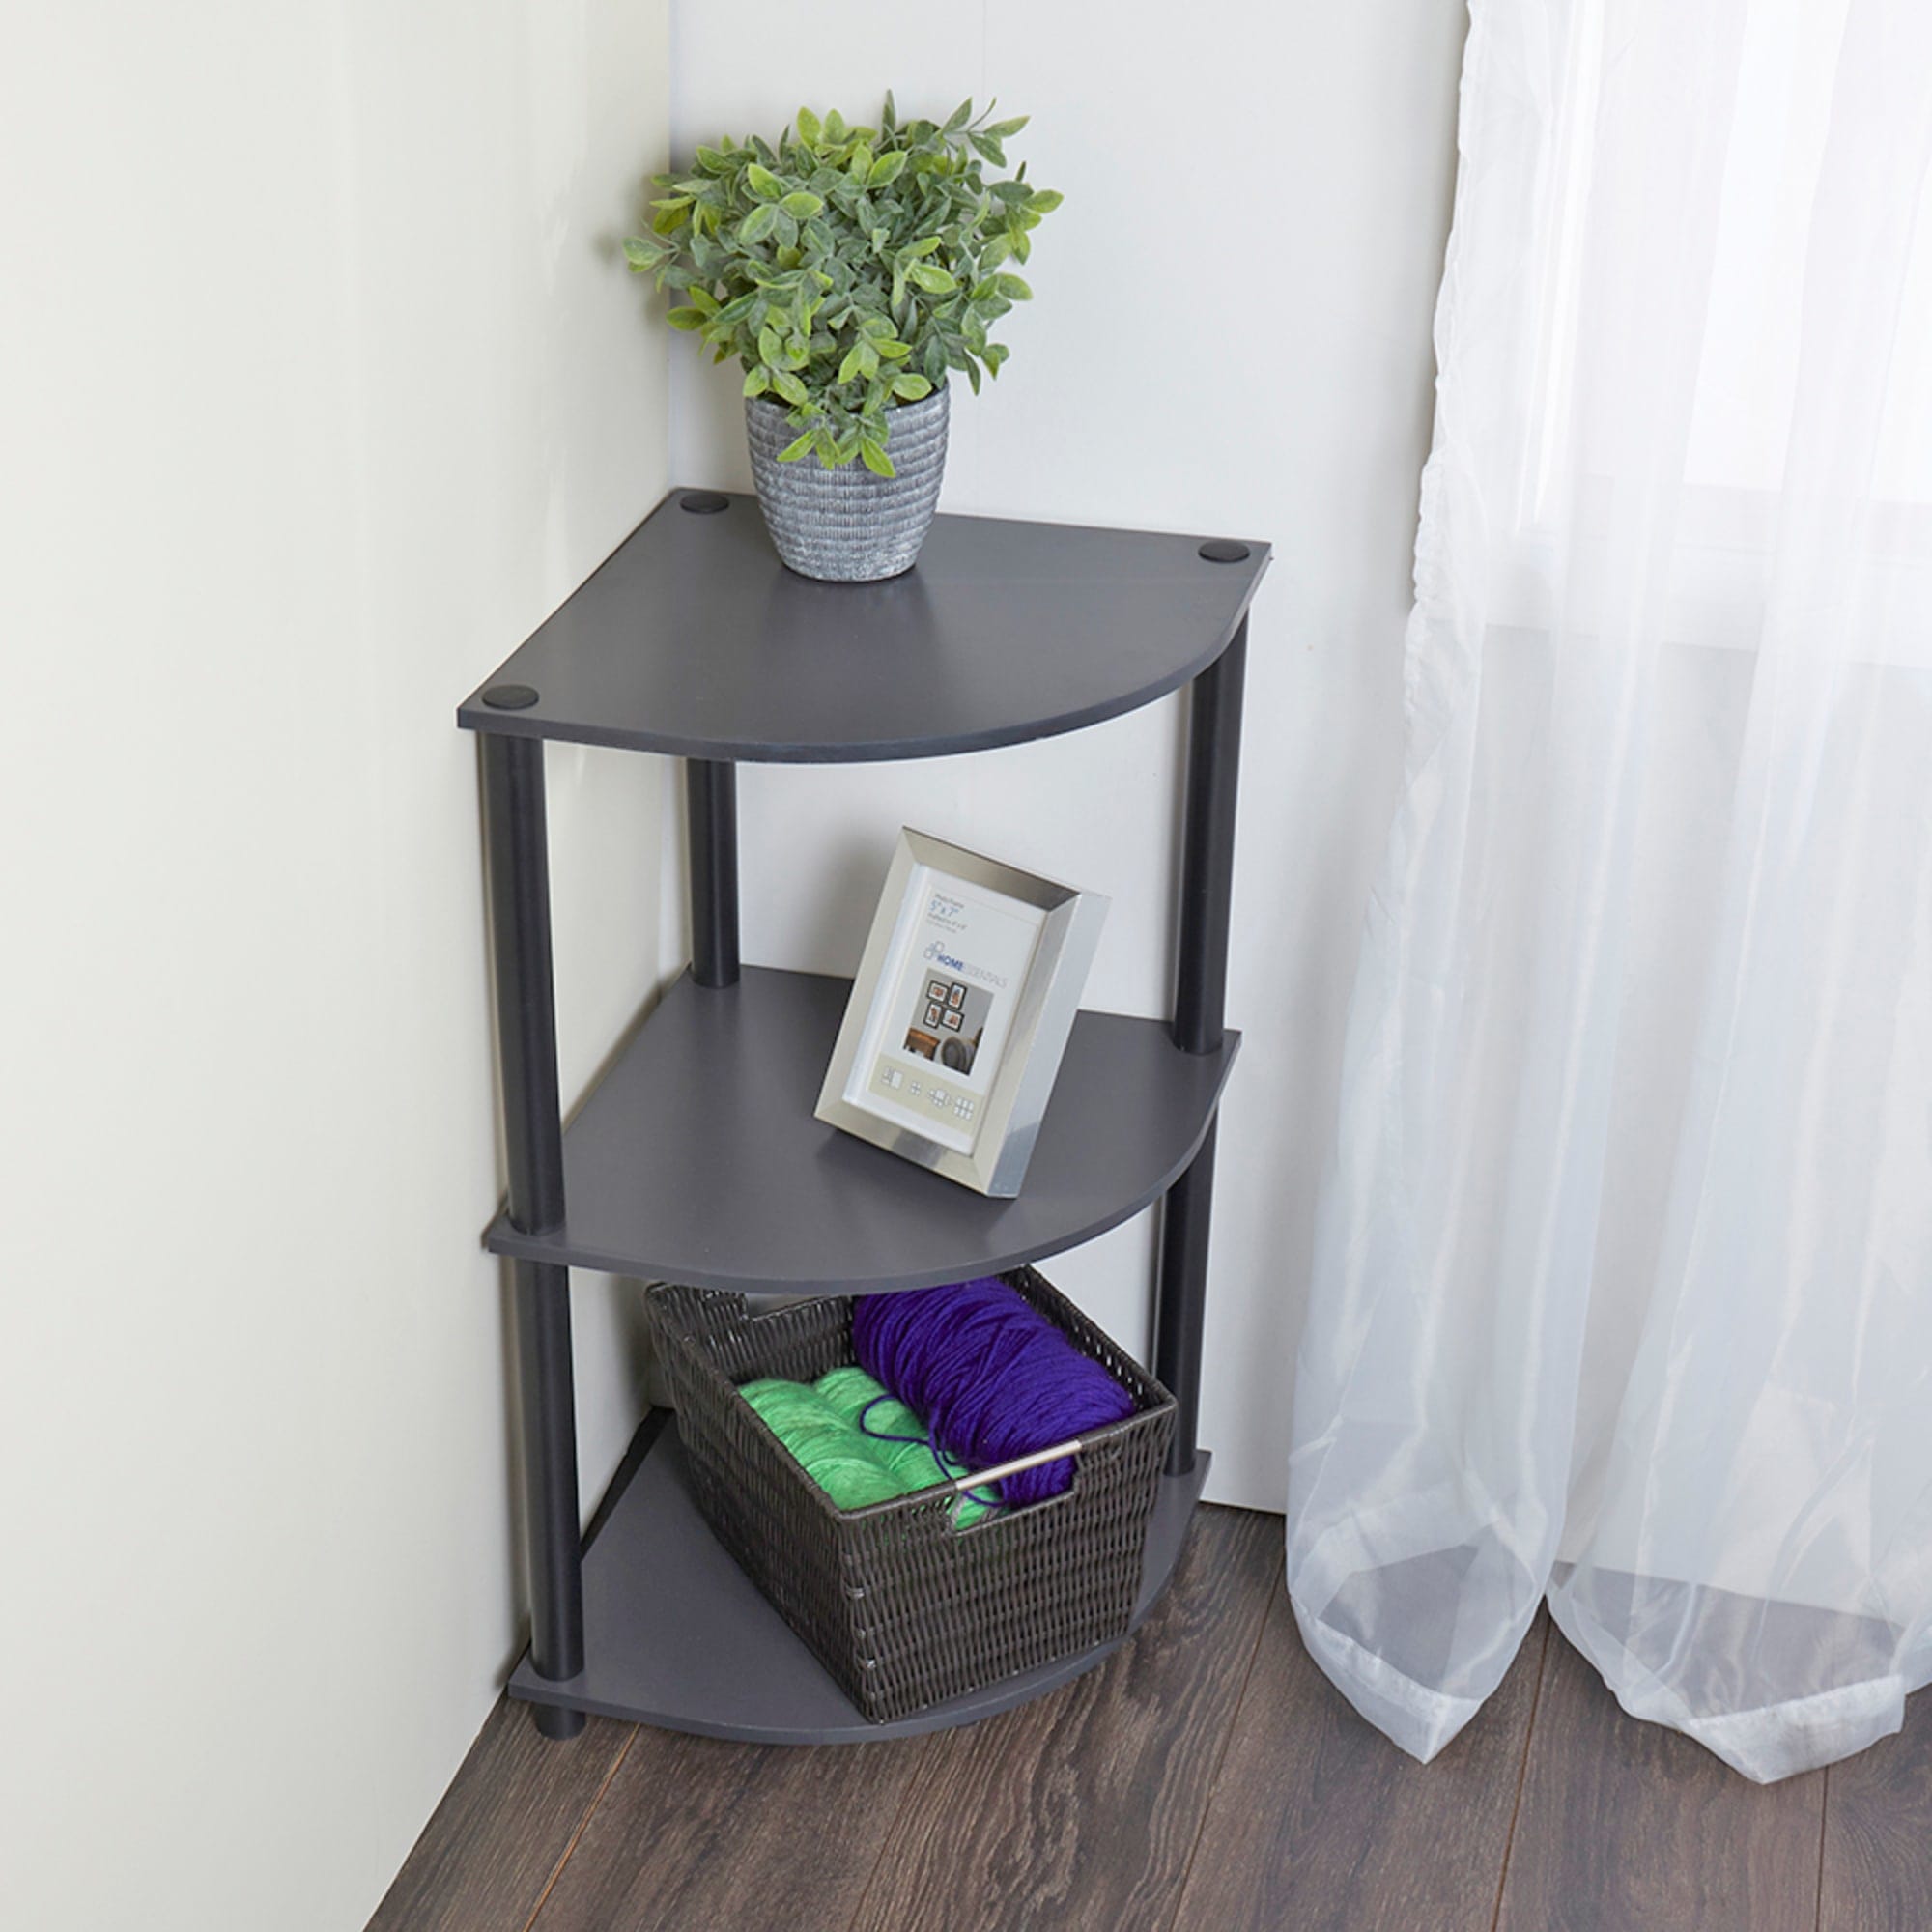 Home Basics 3 Tier Corner Shelf, Grey $25.00 EACH, CASE PACK OF 1